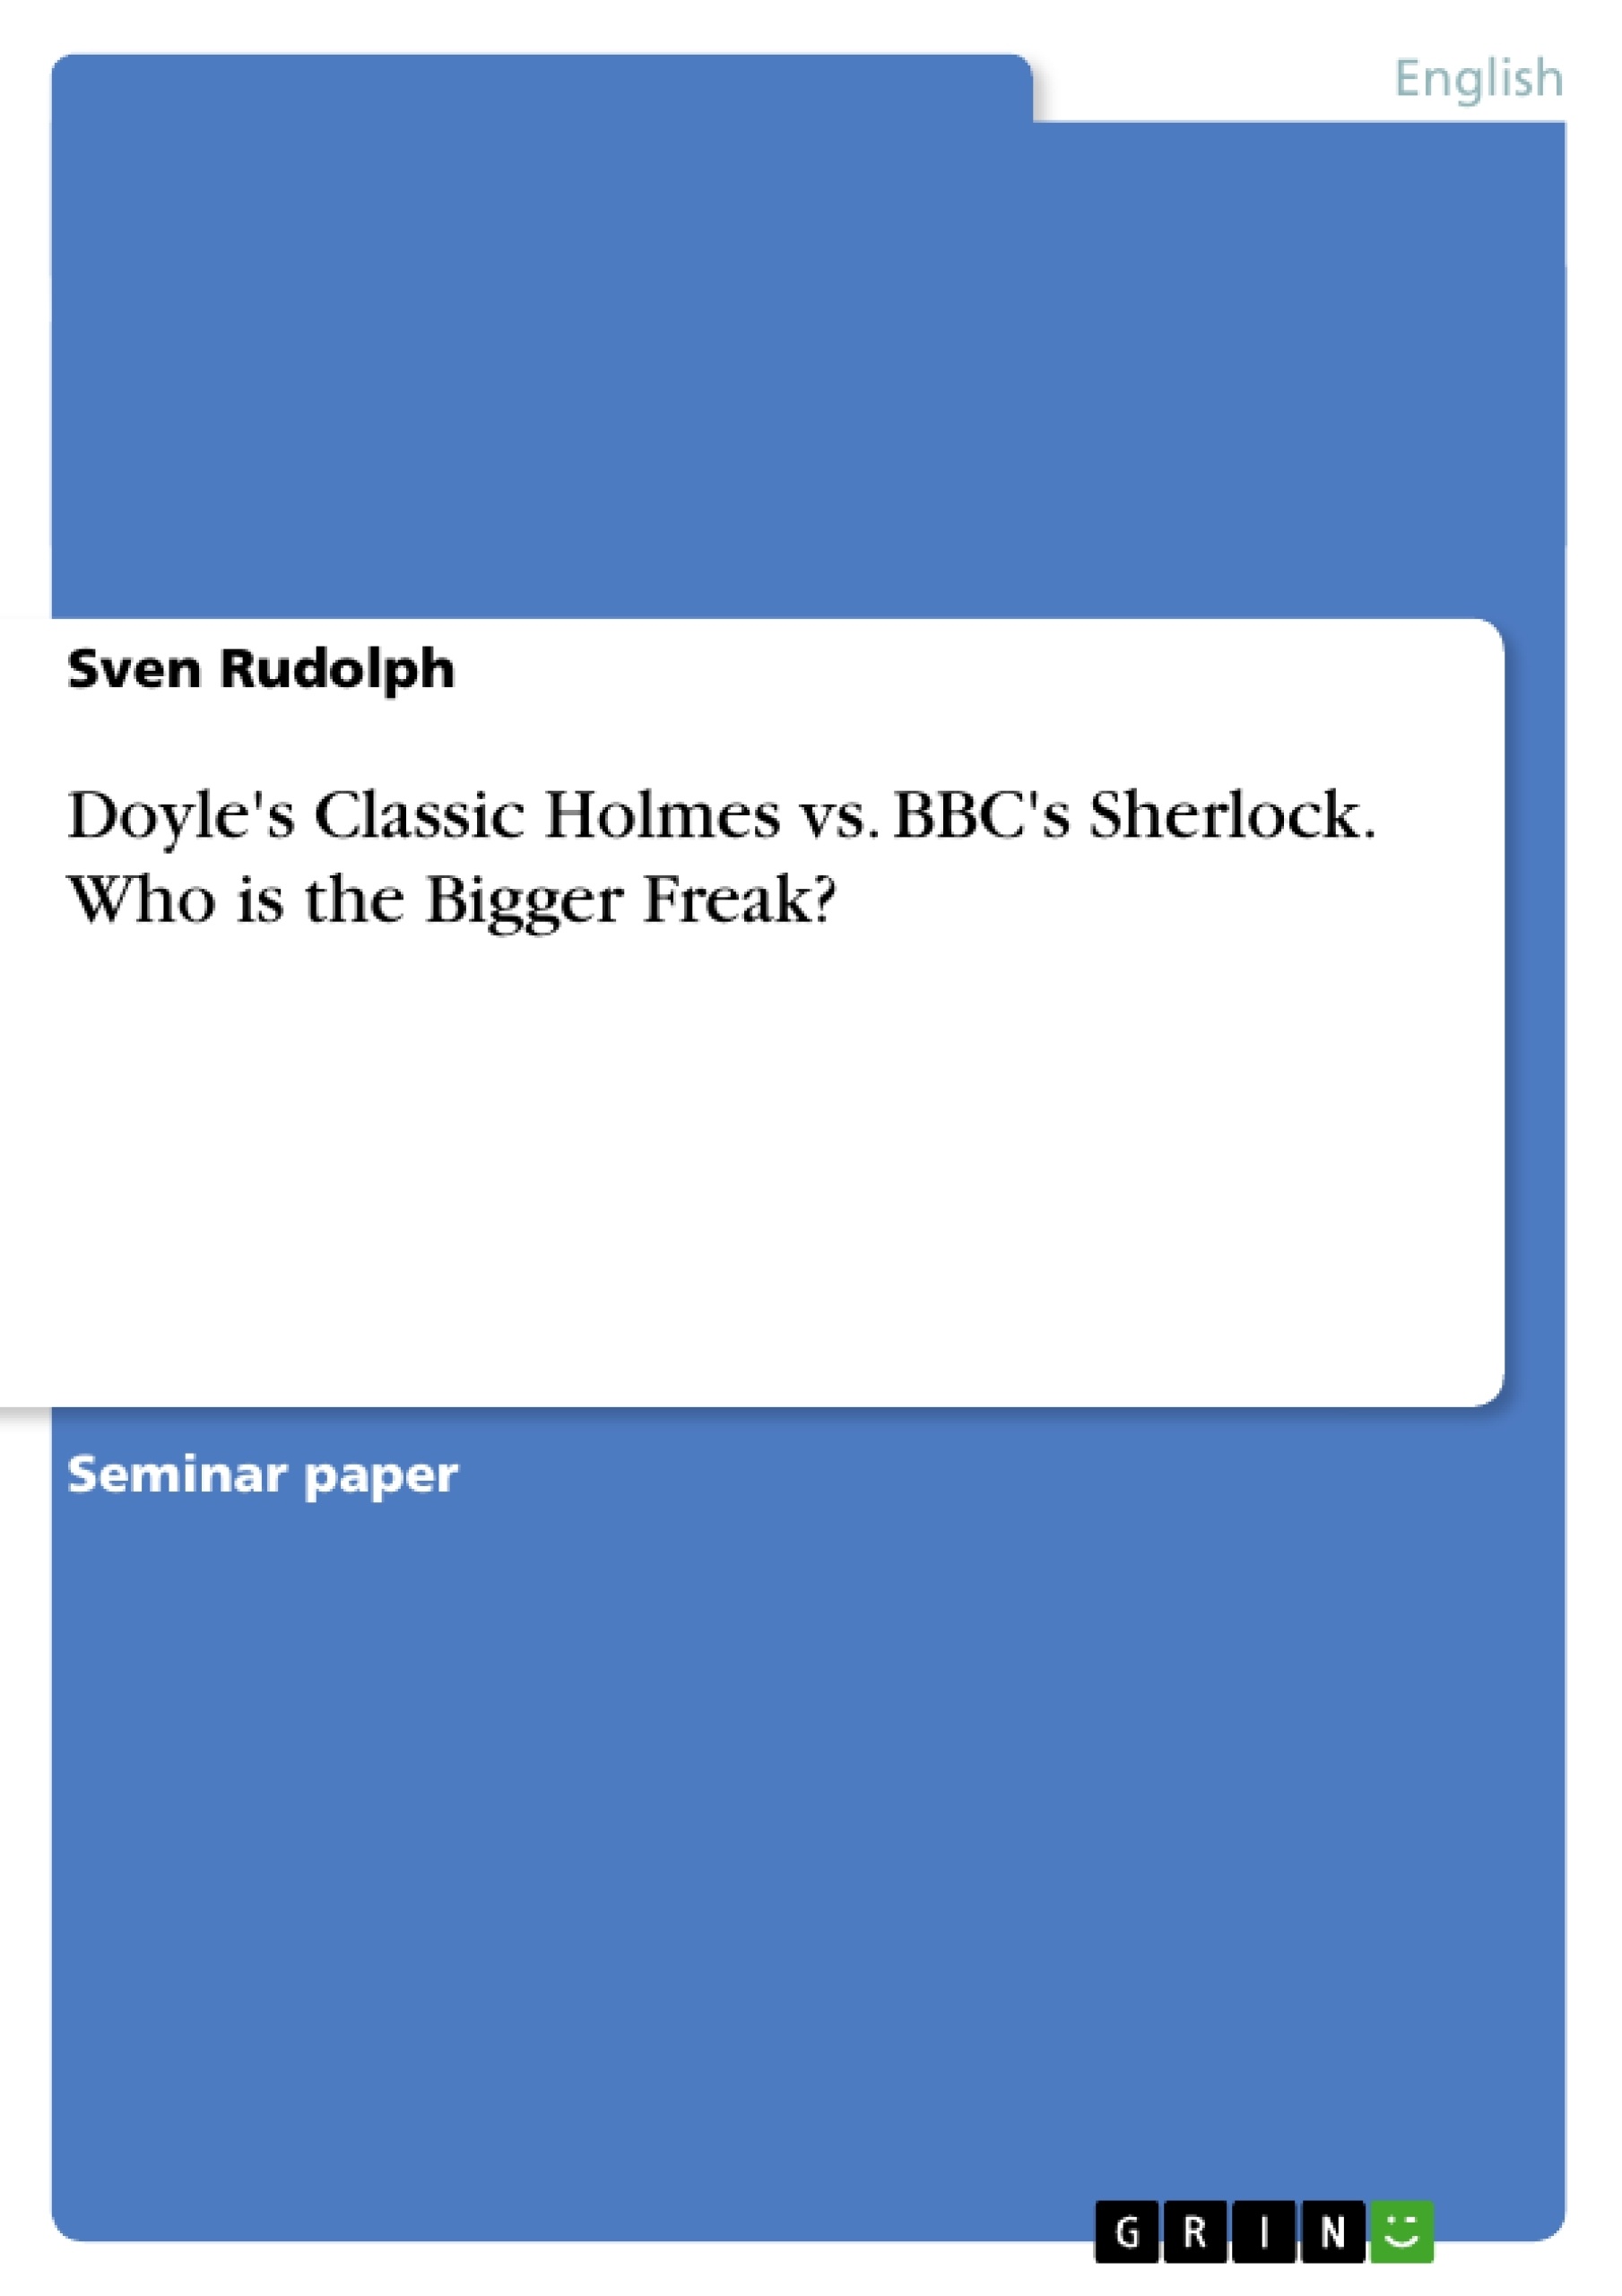 Titel: Doyle's Classic Holmes vs. BBC's Sherlock. Who is the Bigger Freak?